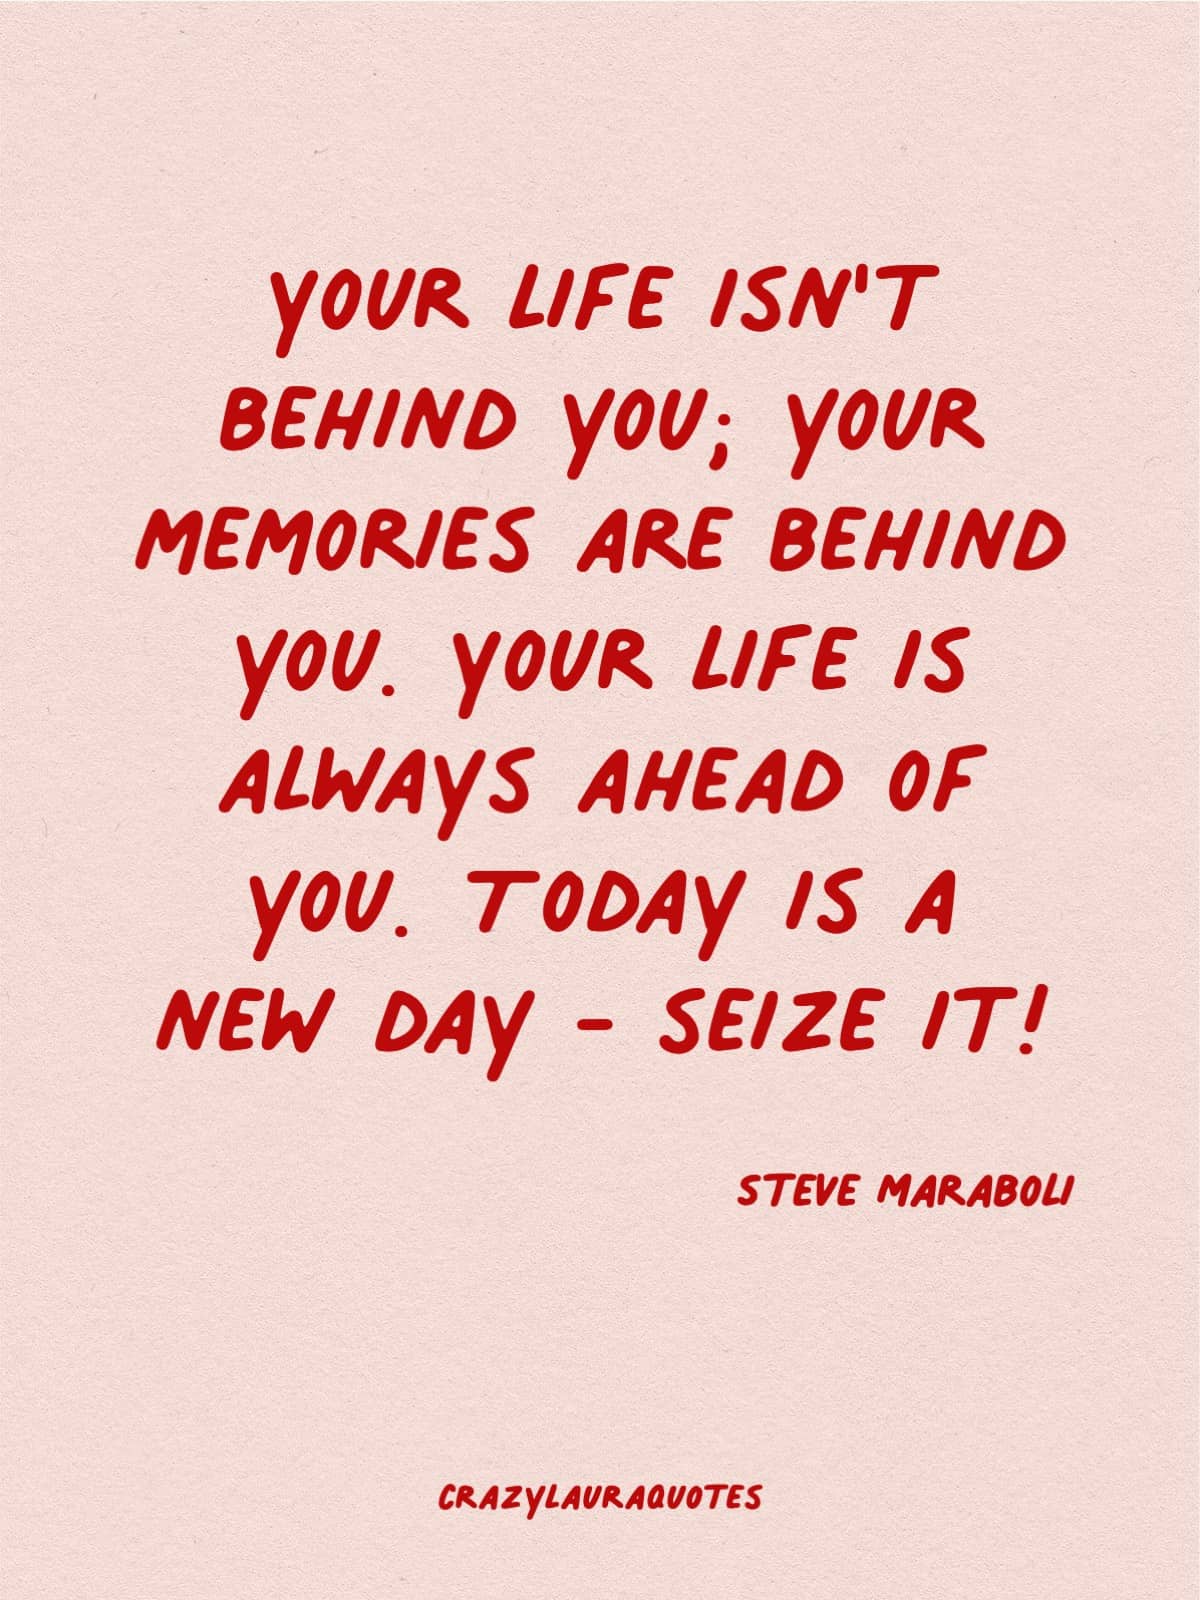 seize the day steve maraboli quote